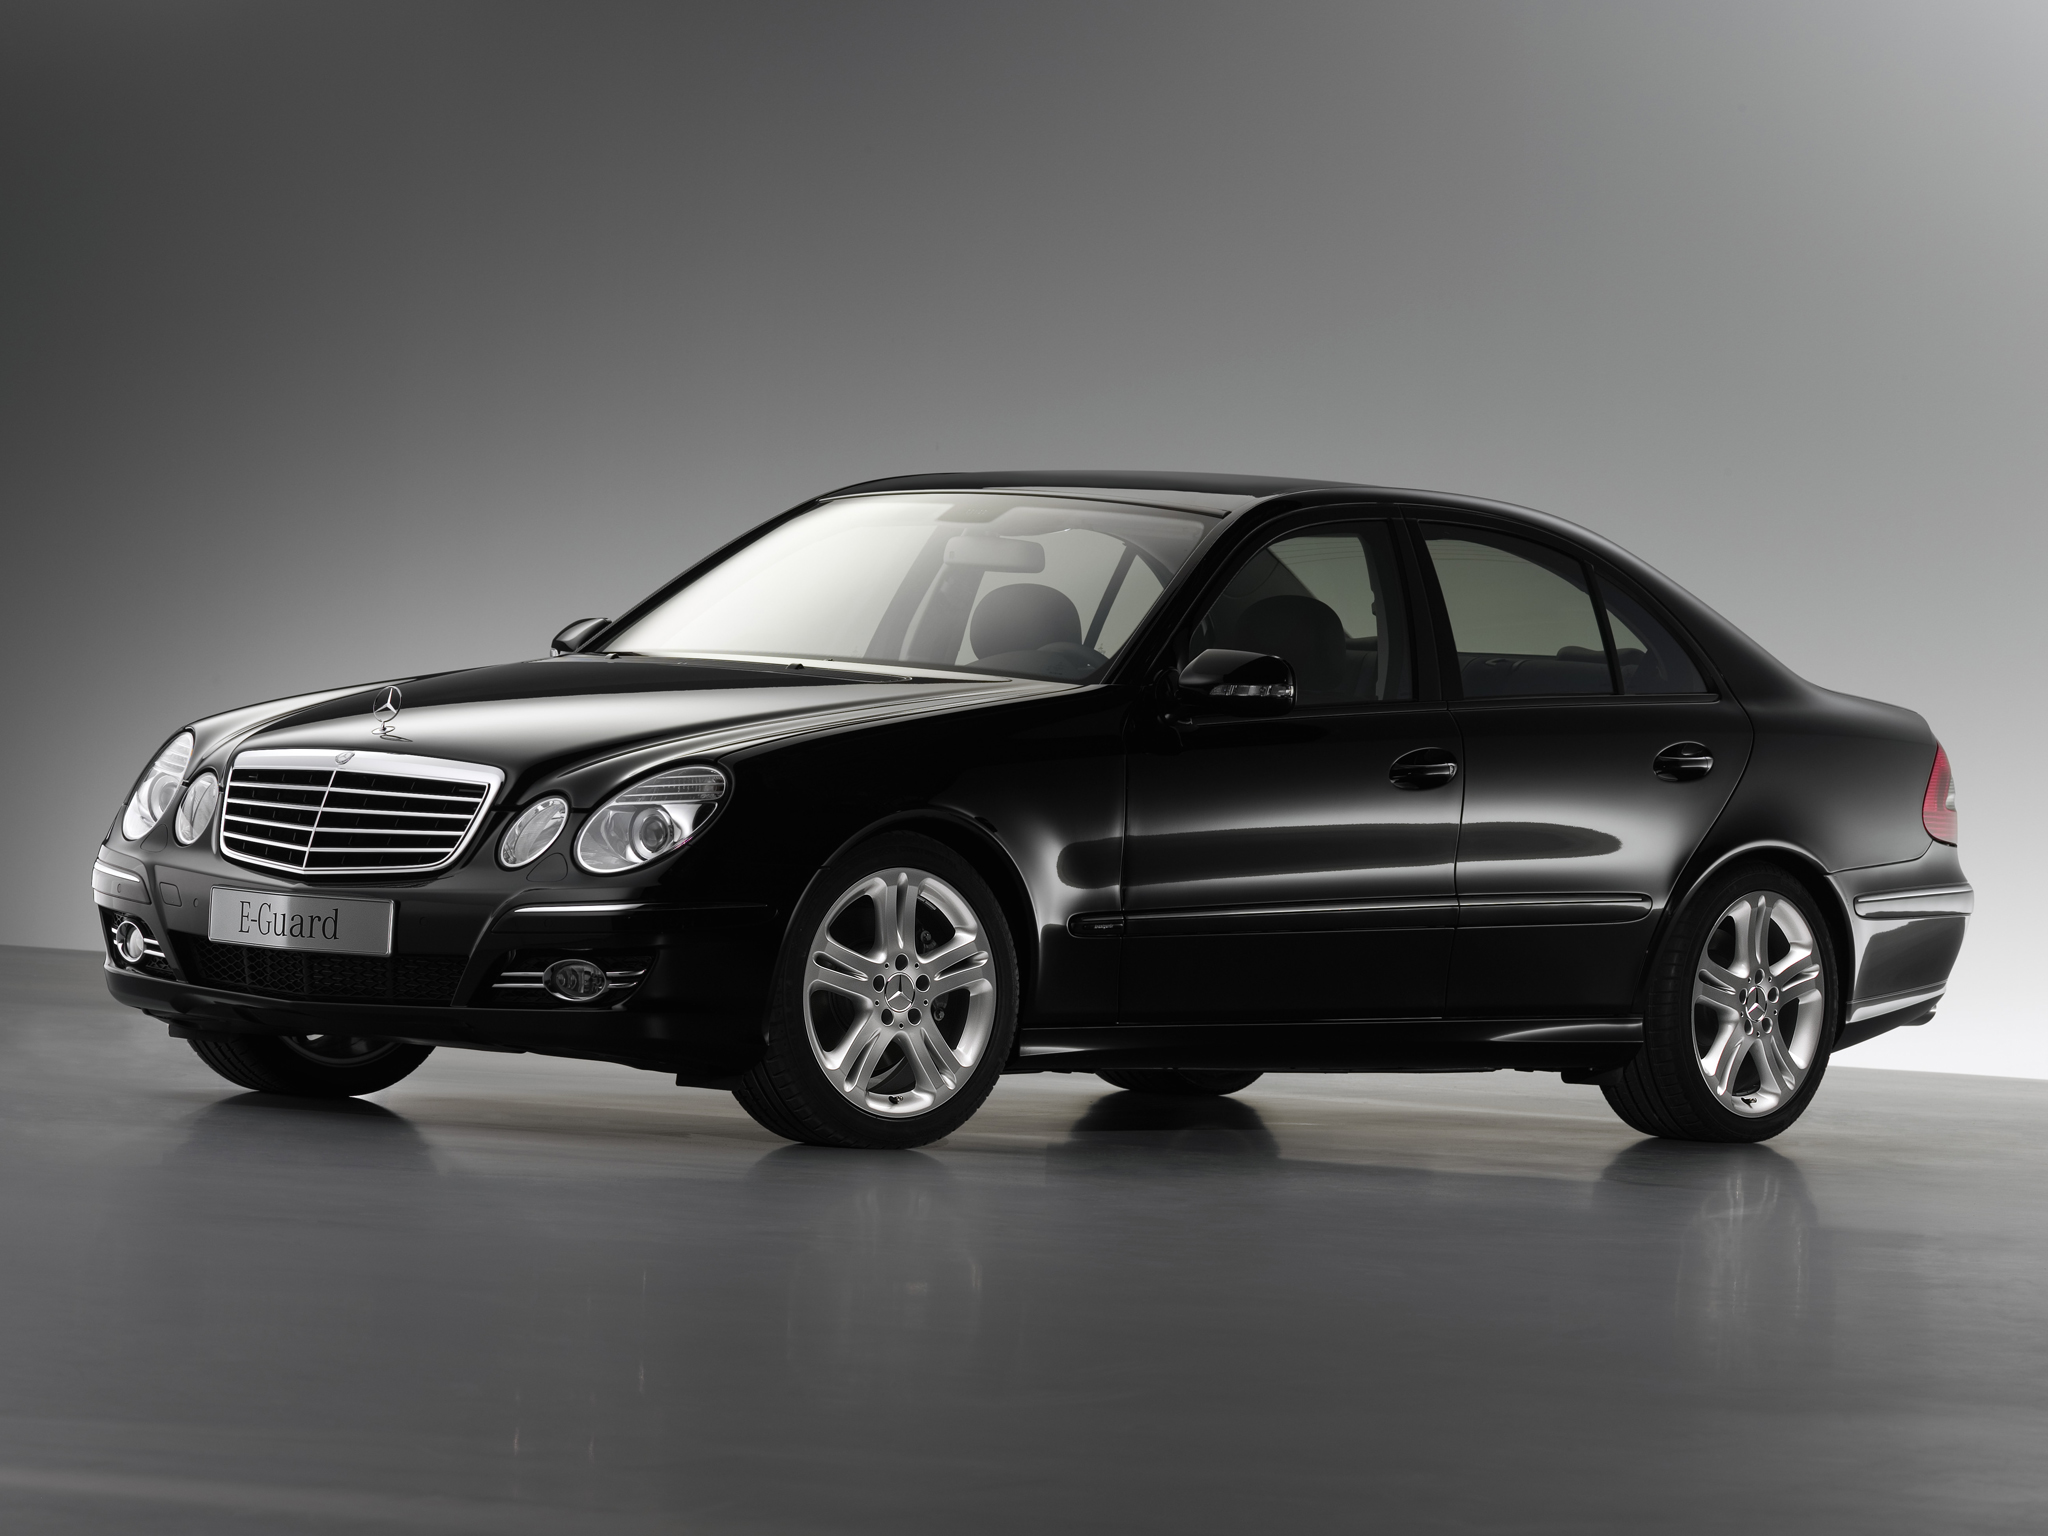 2006, Armored, Mercedes, Benz, E klasse, Guard, W211, Luxury Wallpaper